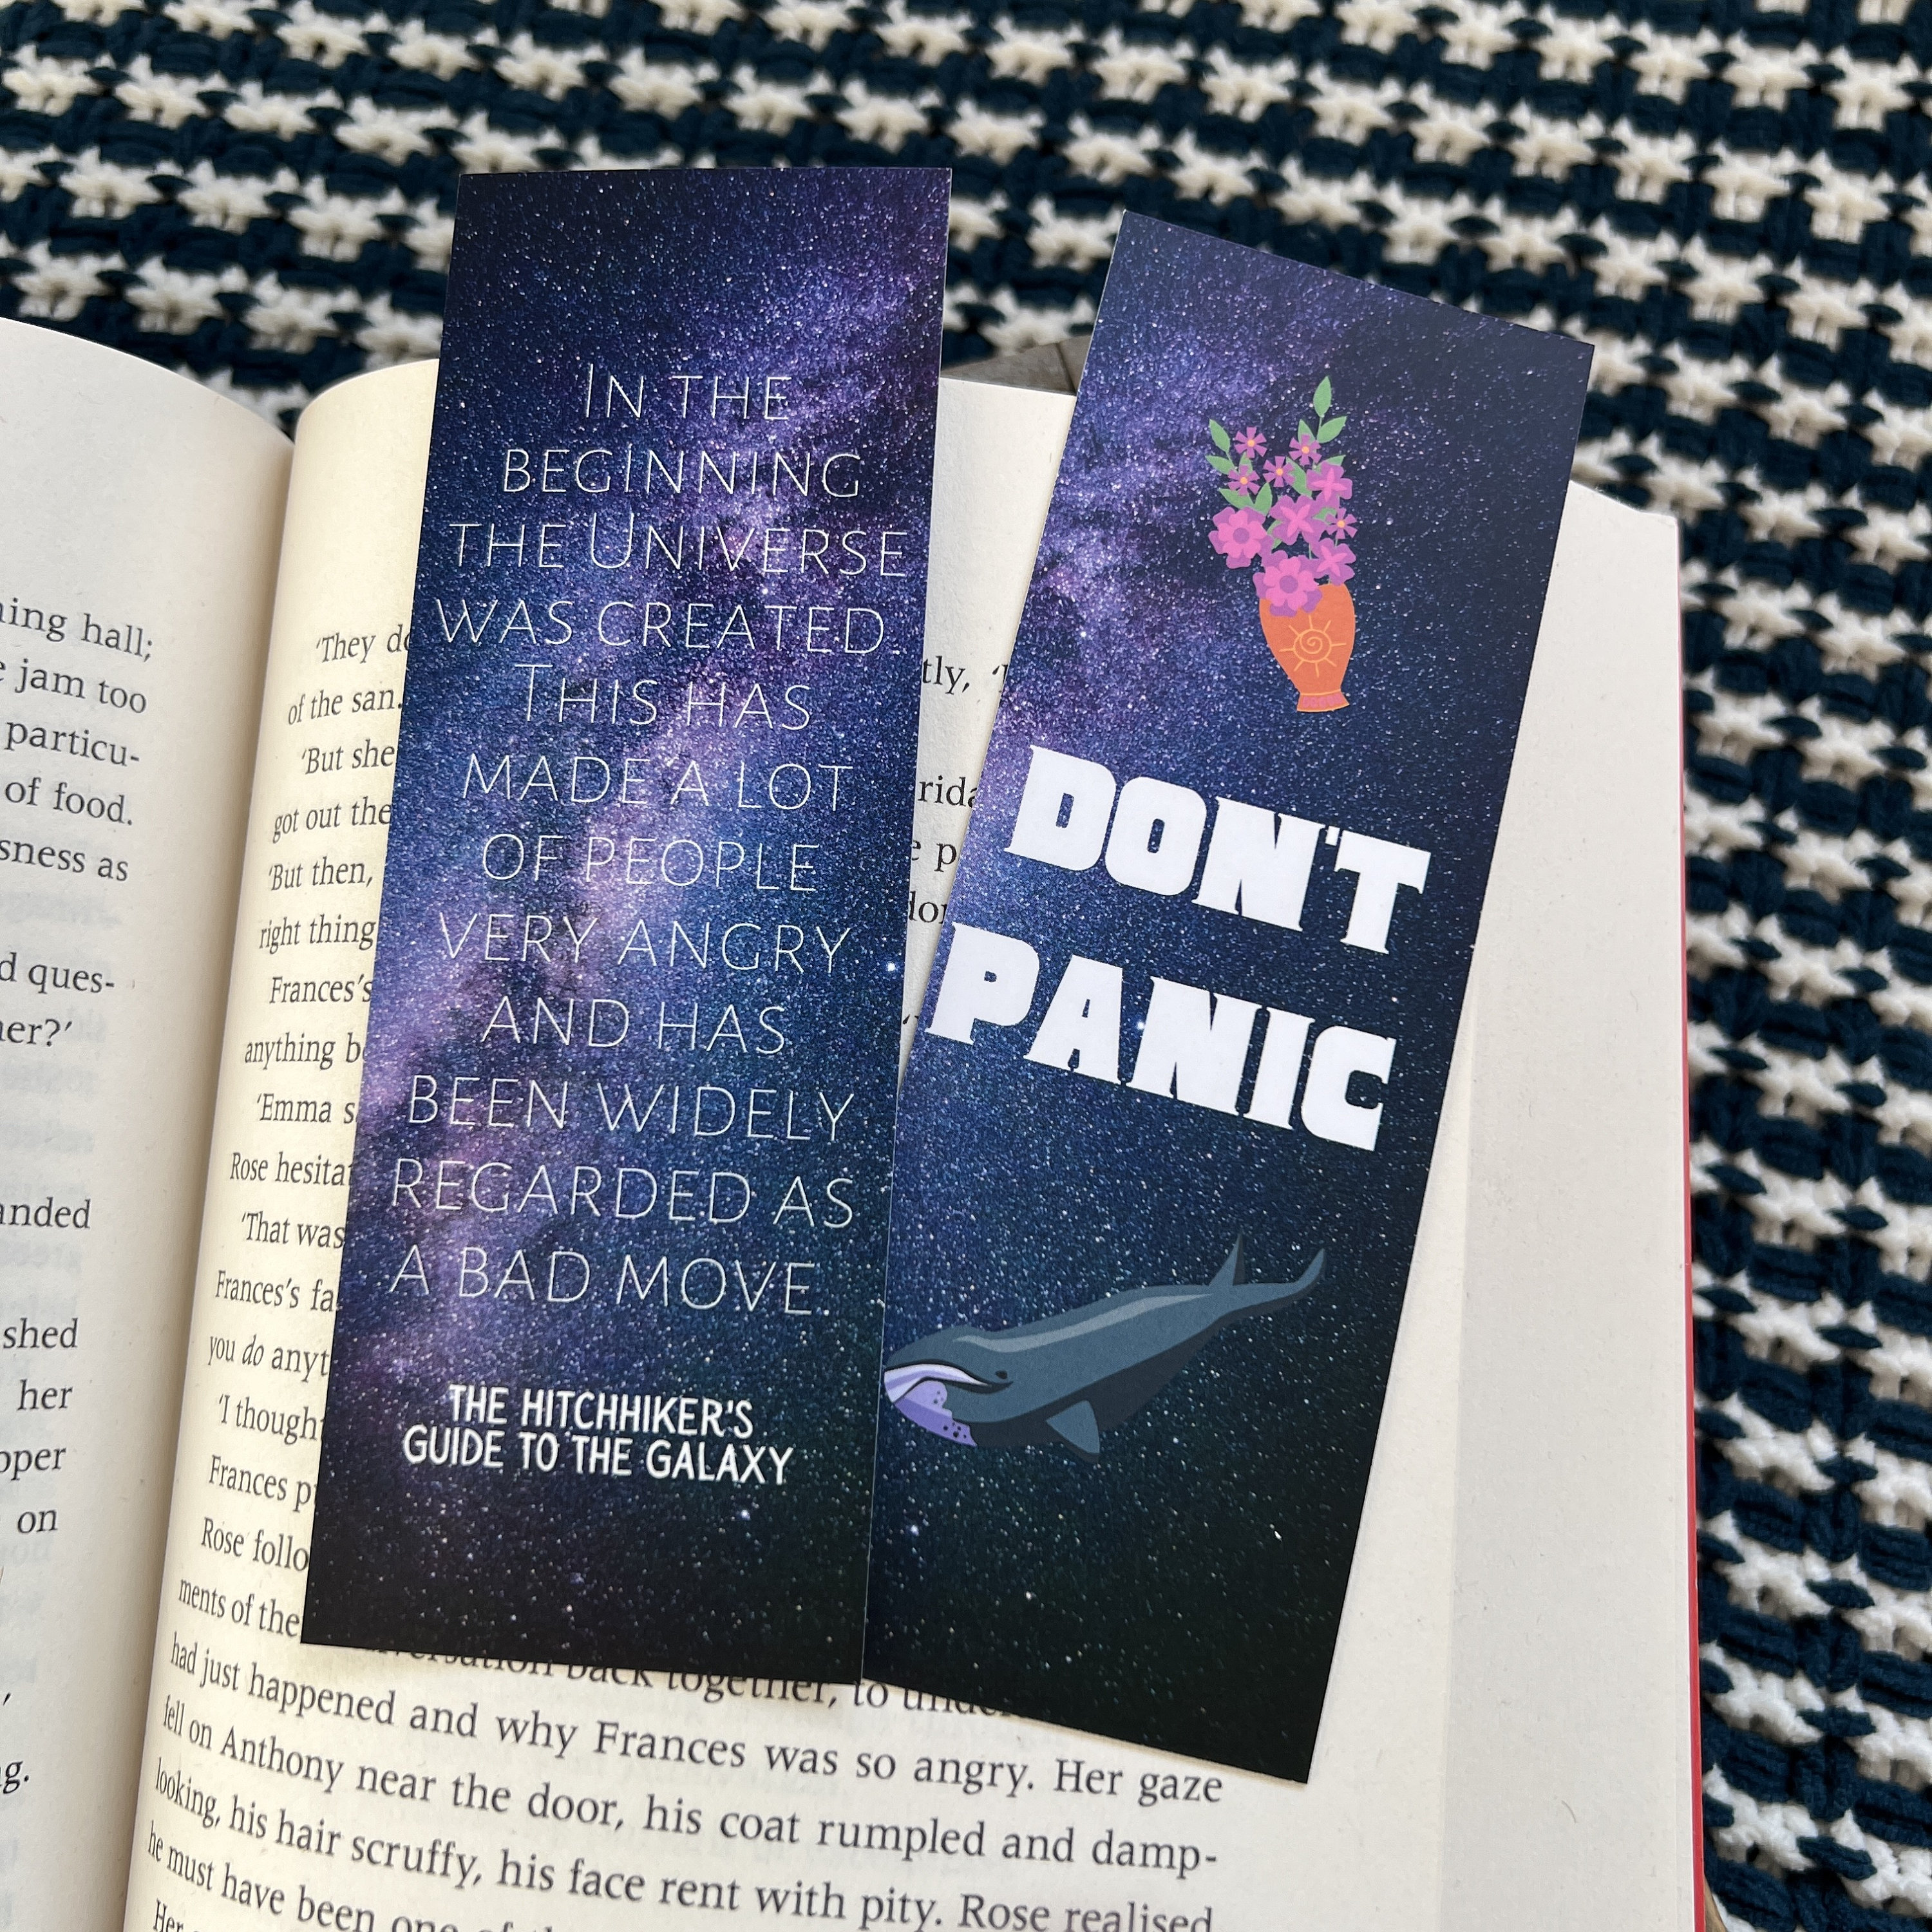 DON'T PANIC 1.25 Magnet Hitchhiker's Guide HHGG Keep Calm Alien Book  Slogan